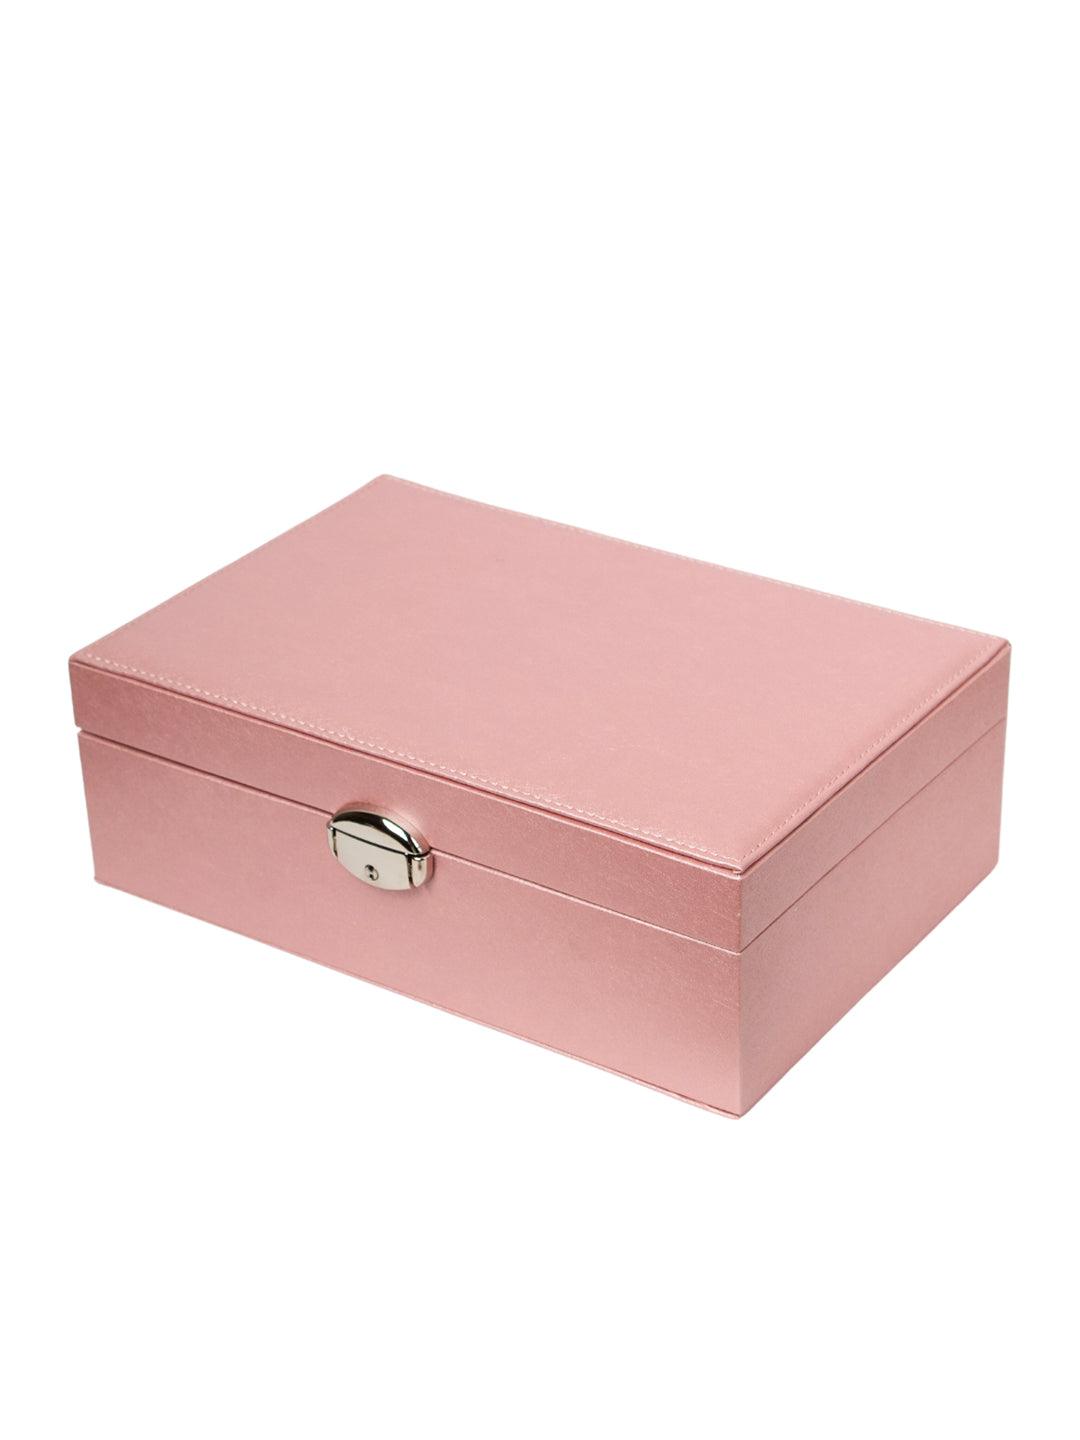 Premium Pink Jewelry Storage Organizer